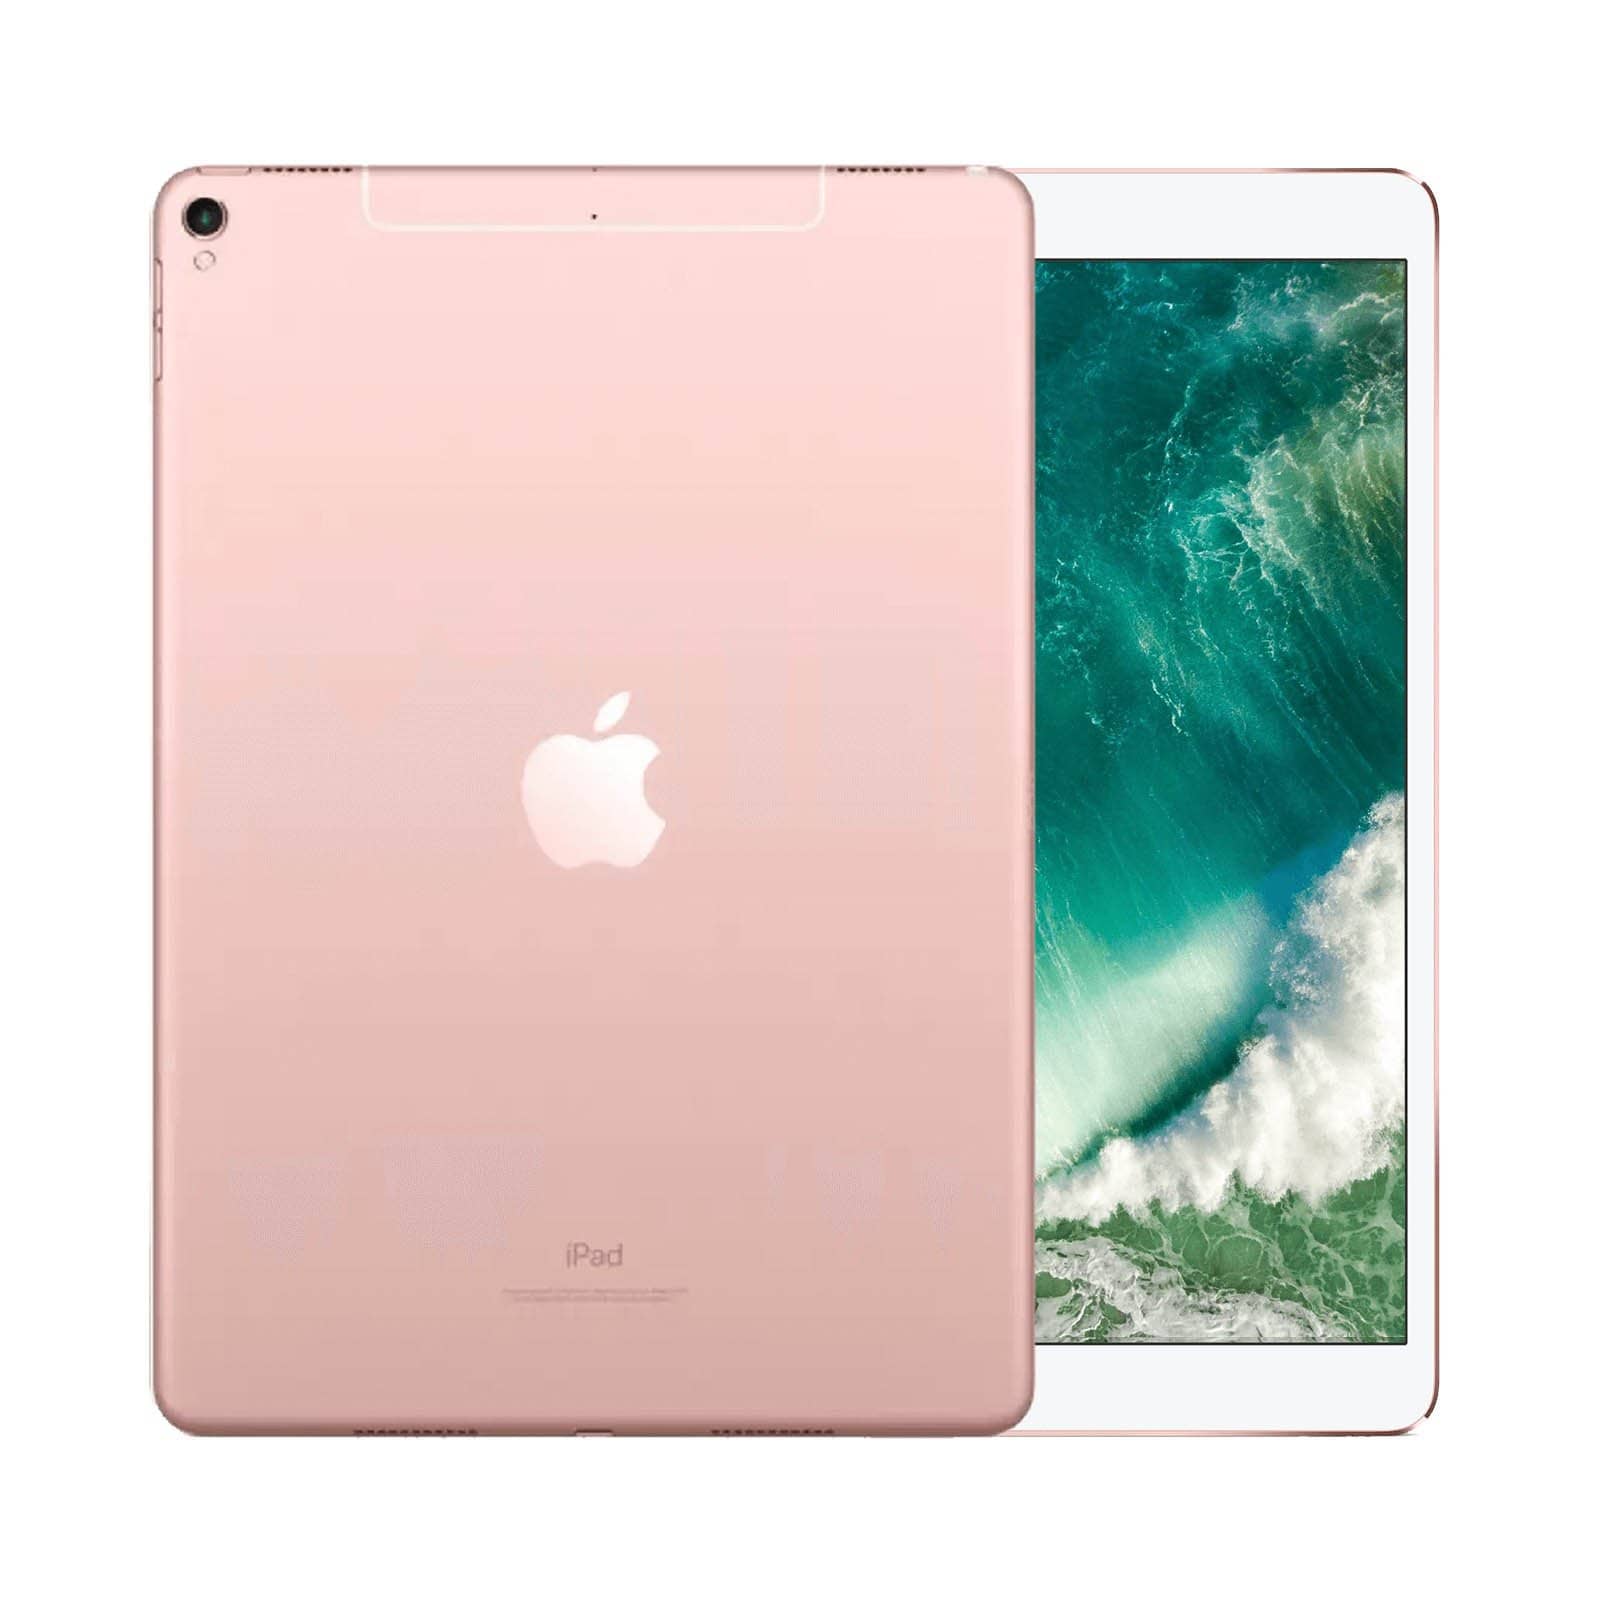 iPad Pro 10.5 Inch 512GB Rose Gold Pristine - Unlocked 512GB Rose Gold Pristine